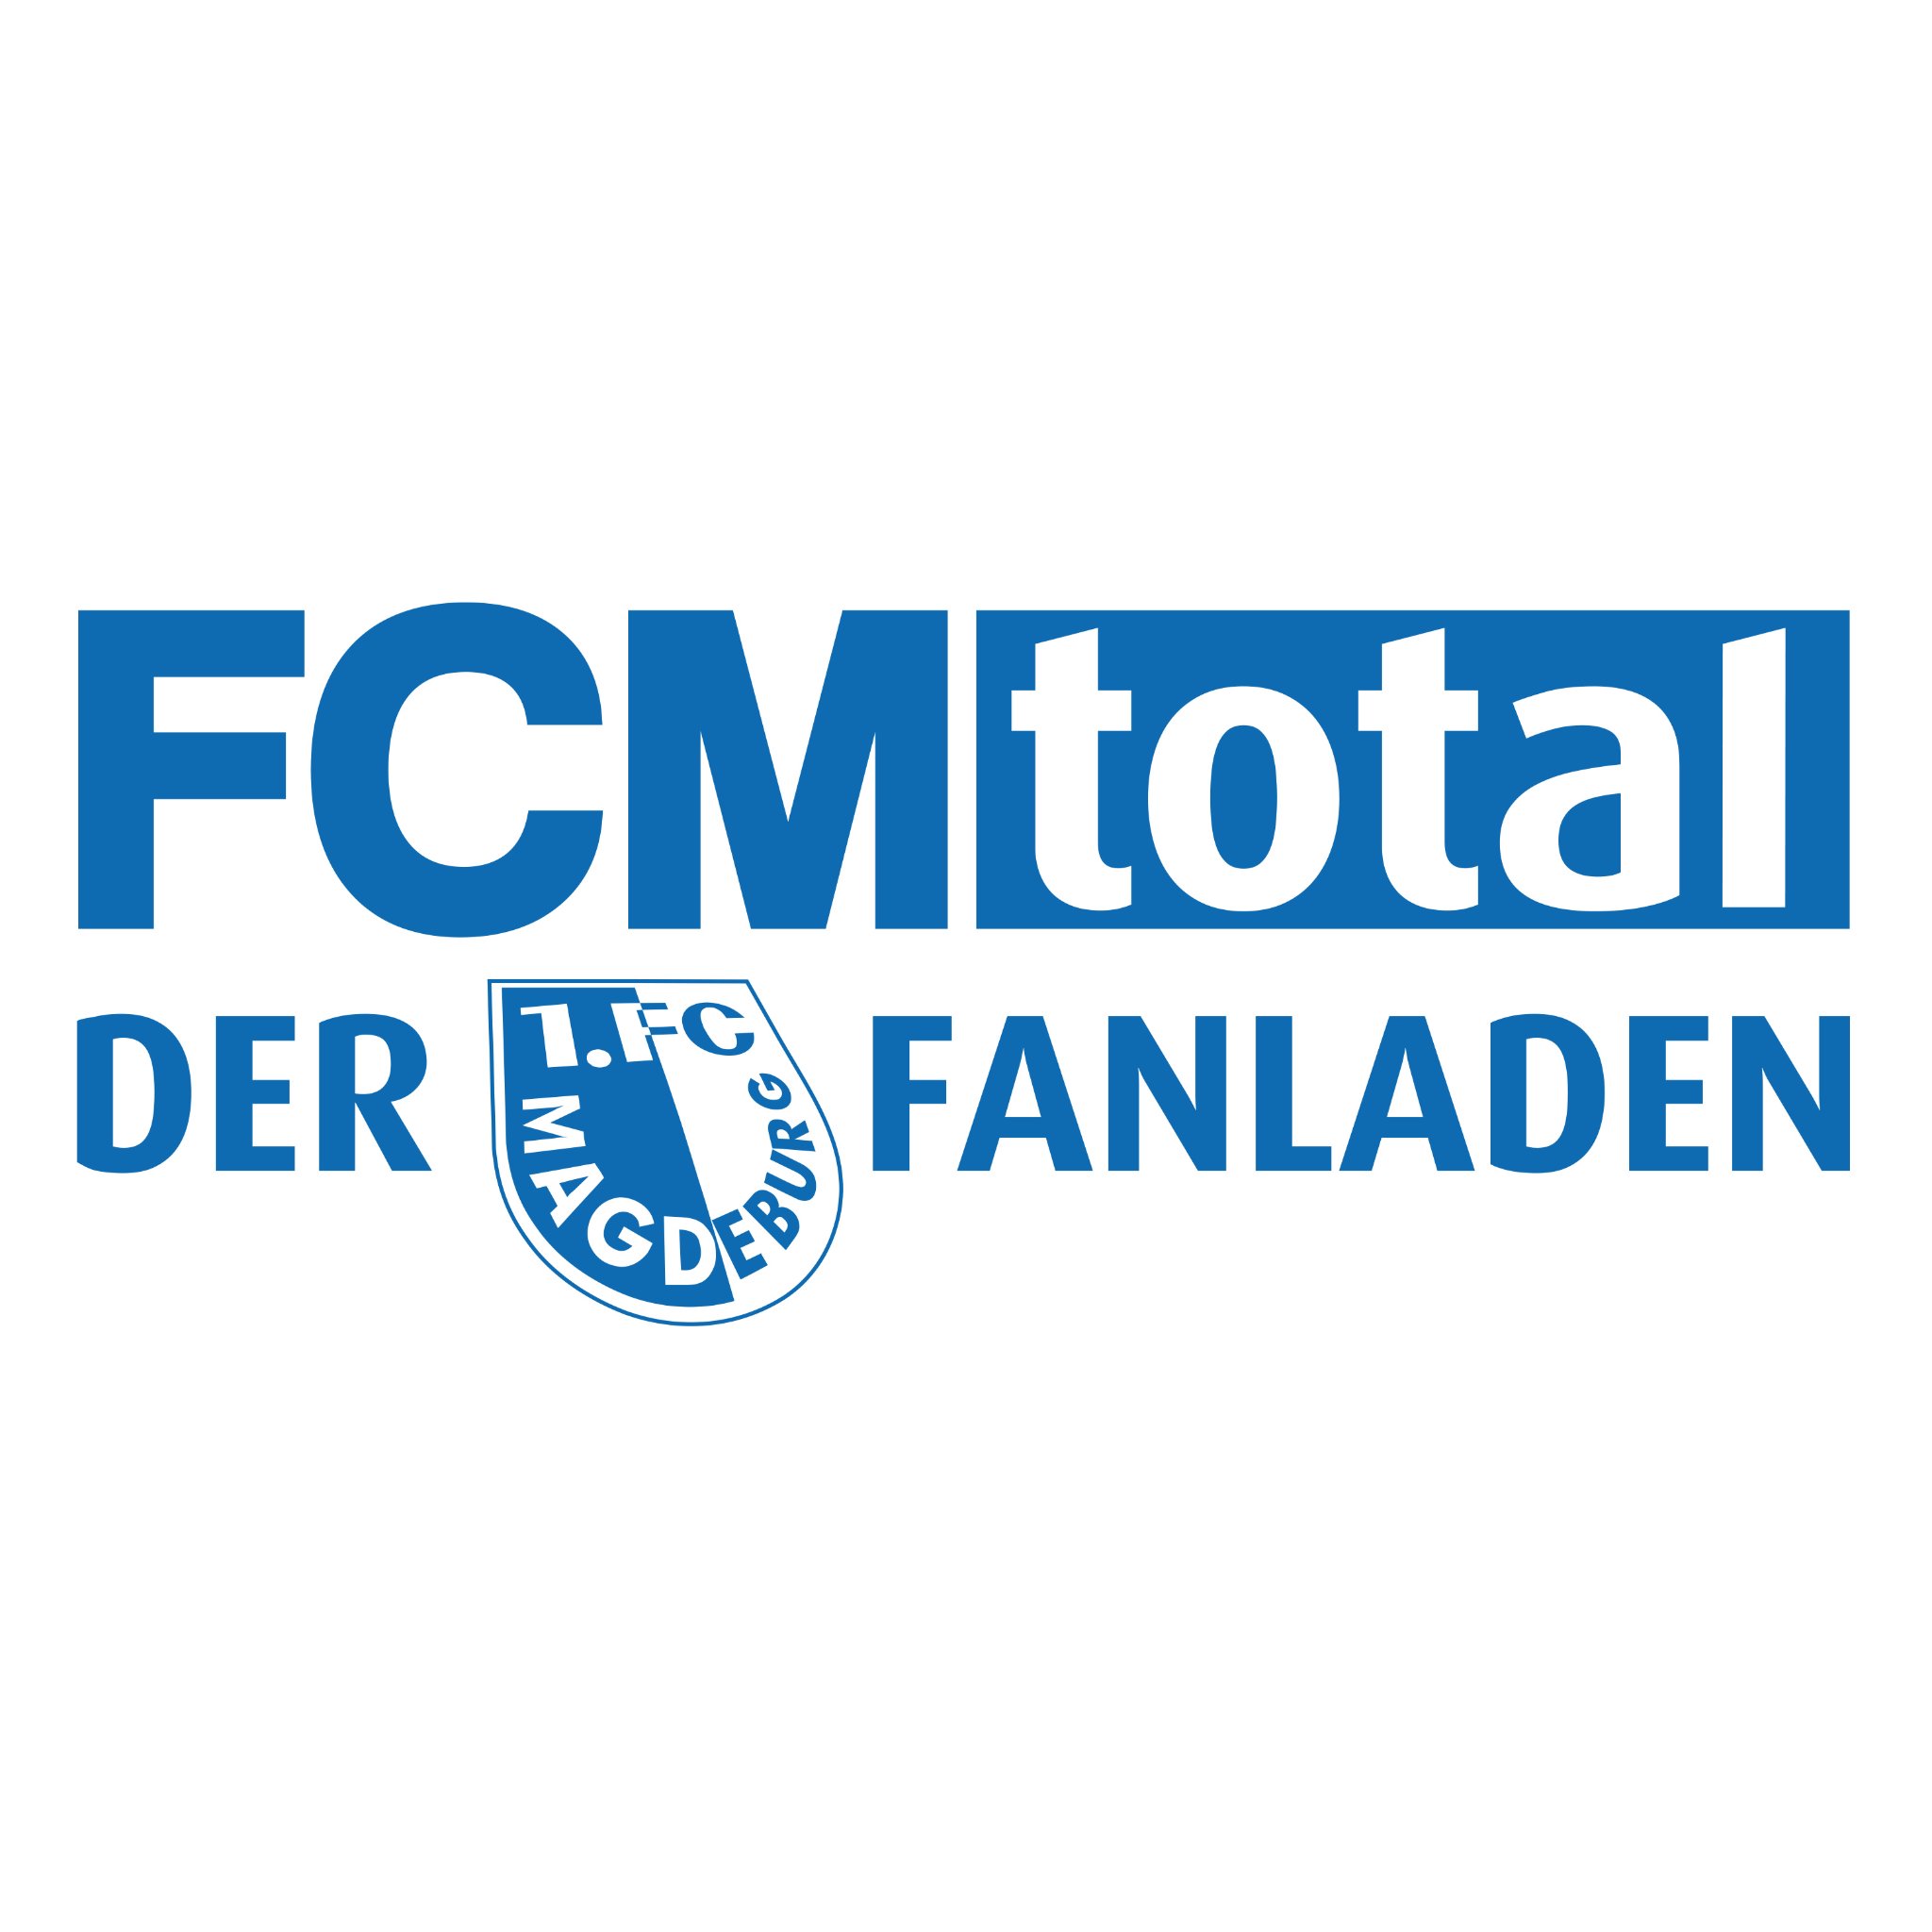 FCMtotal - Der Fanladen, offizieller Merchandisingpartner des @1FCM